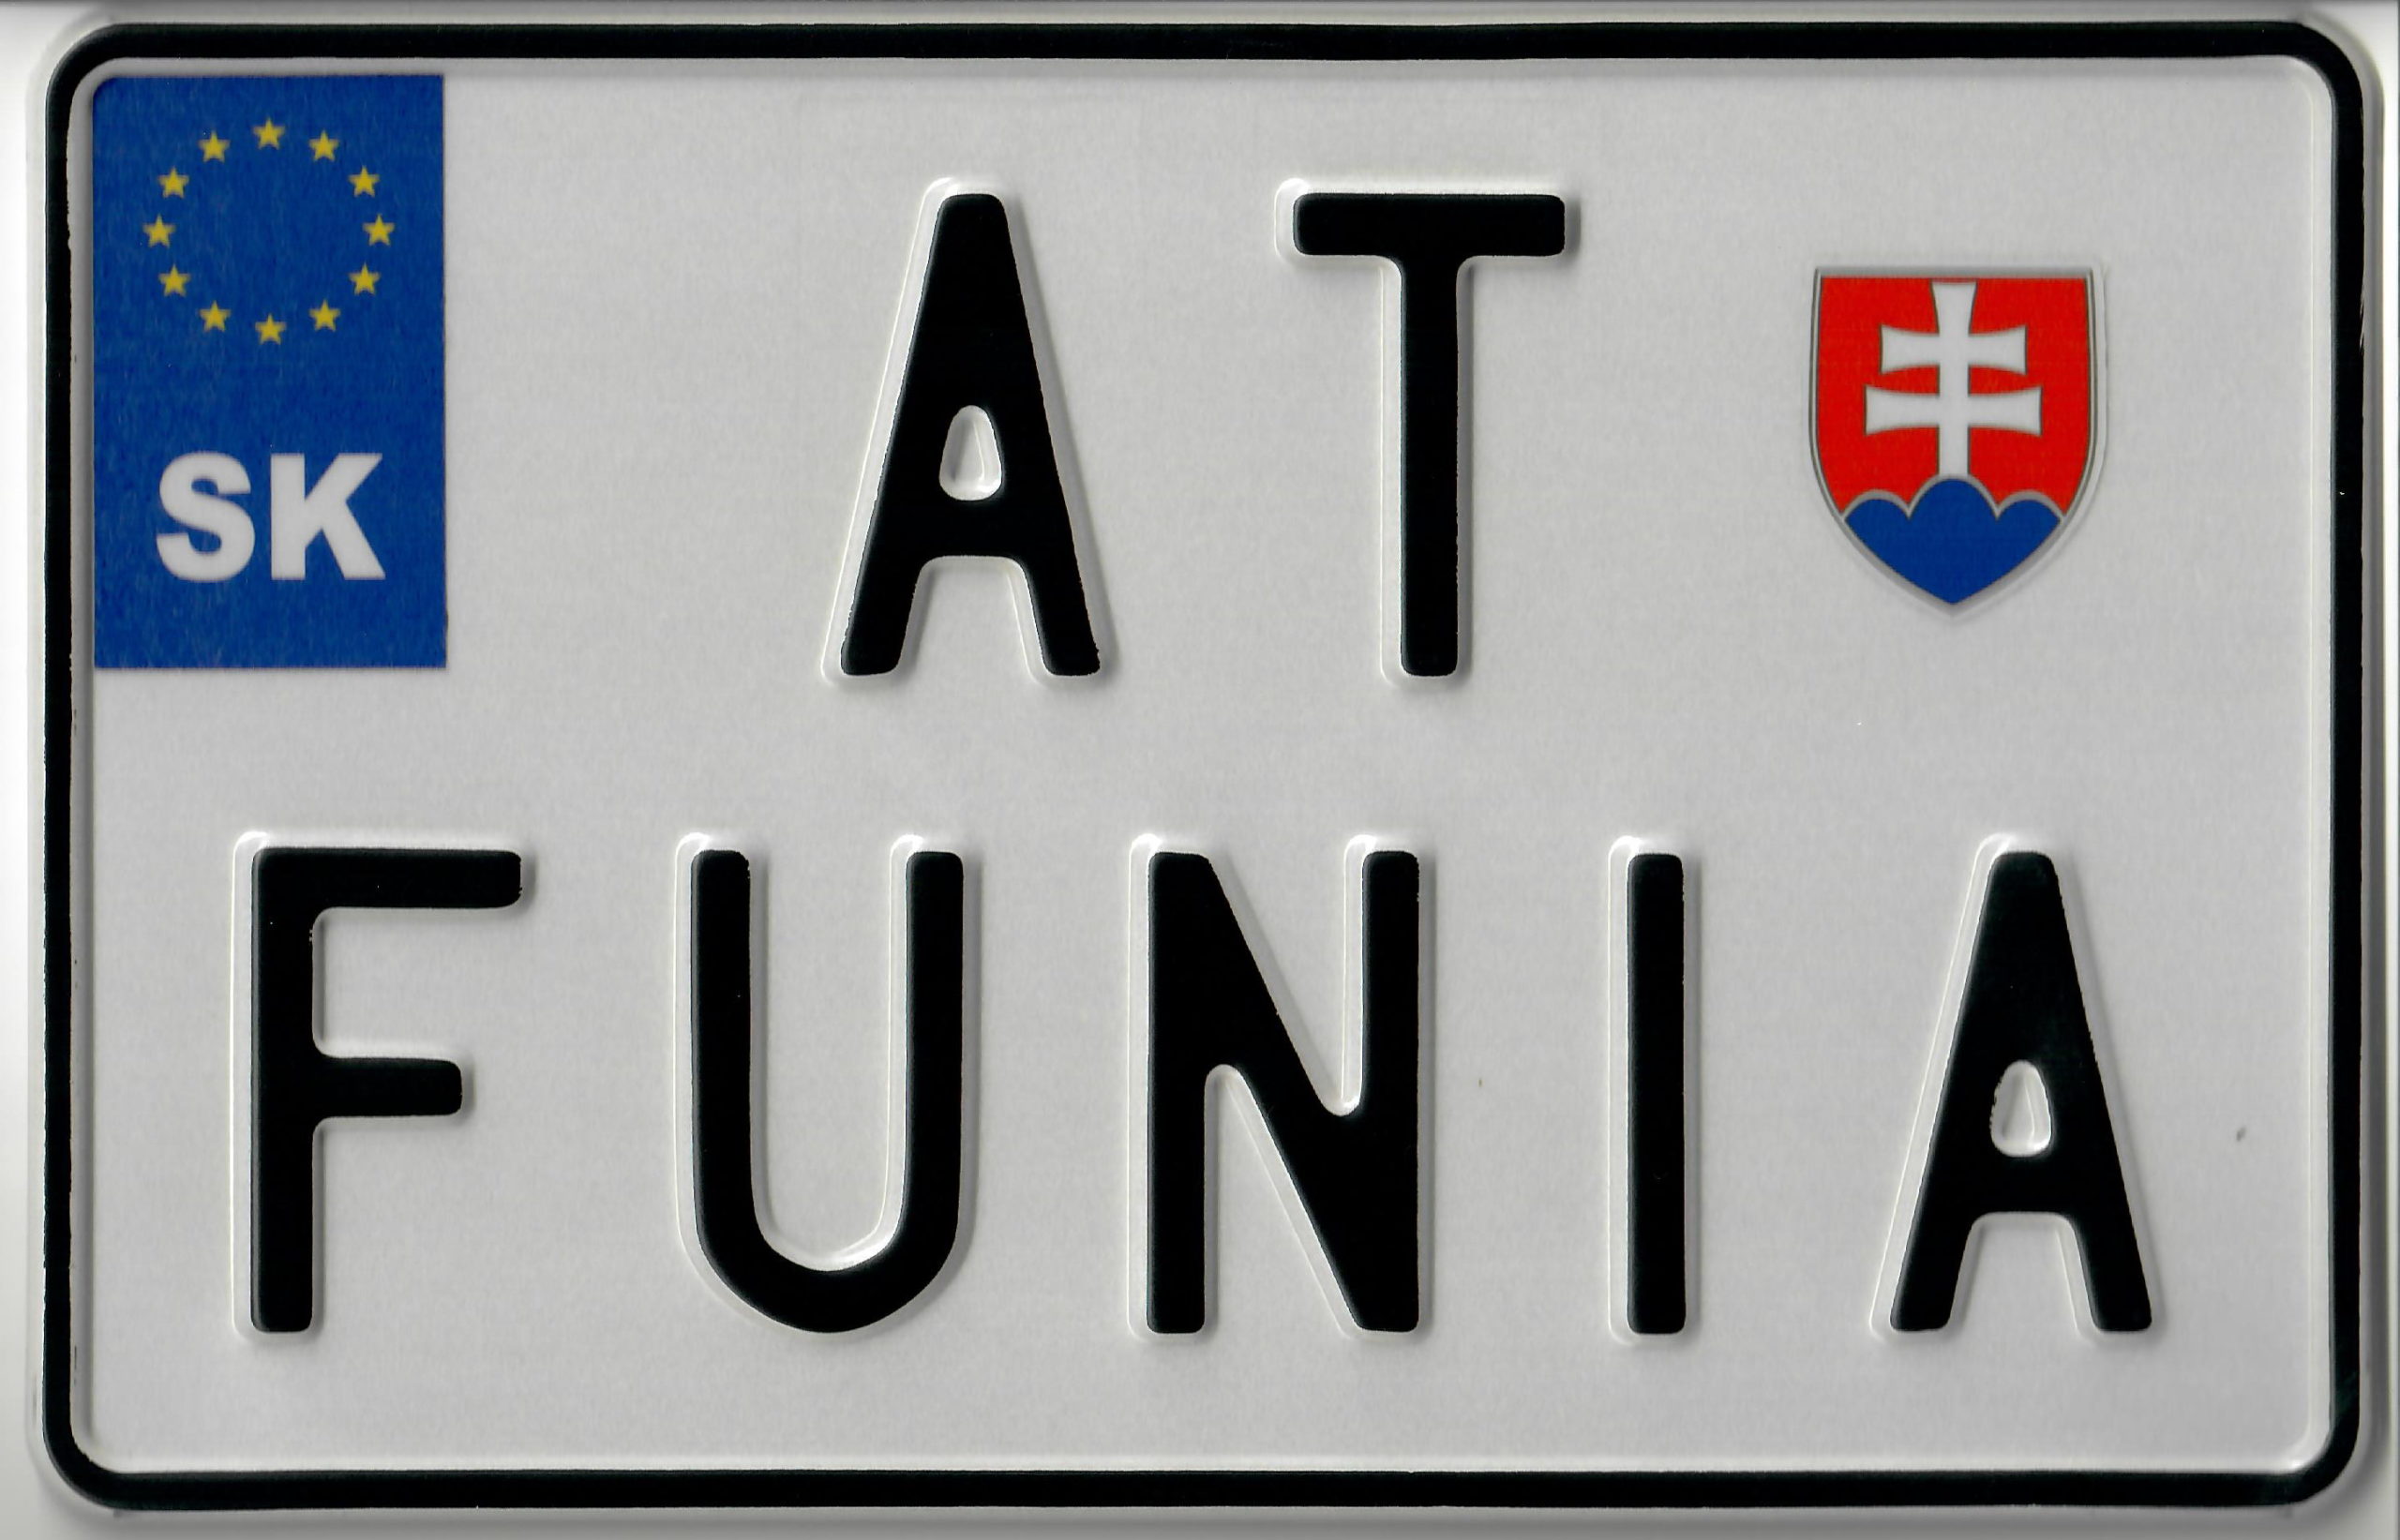 license plate: autofunia (sk)